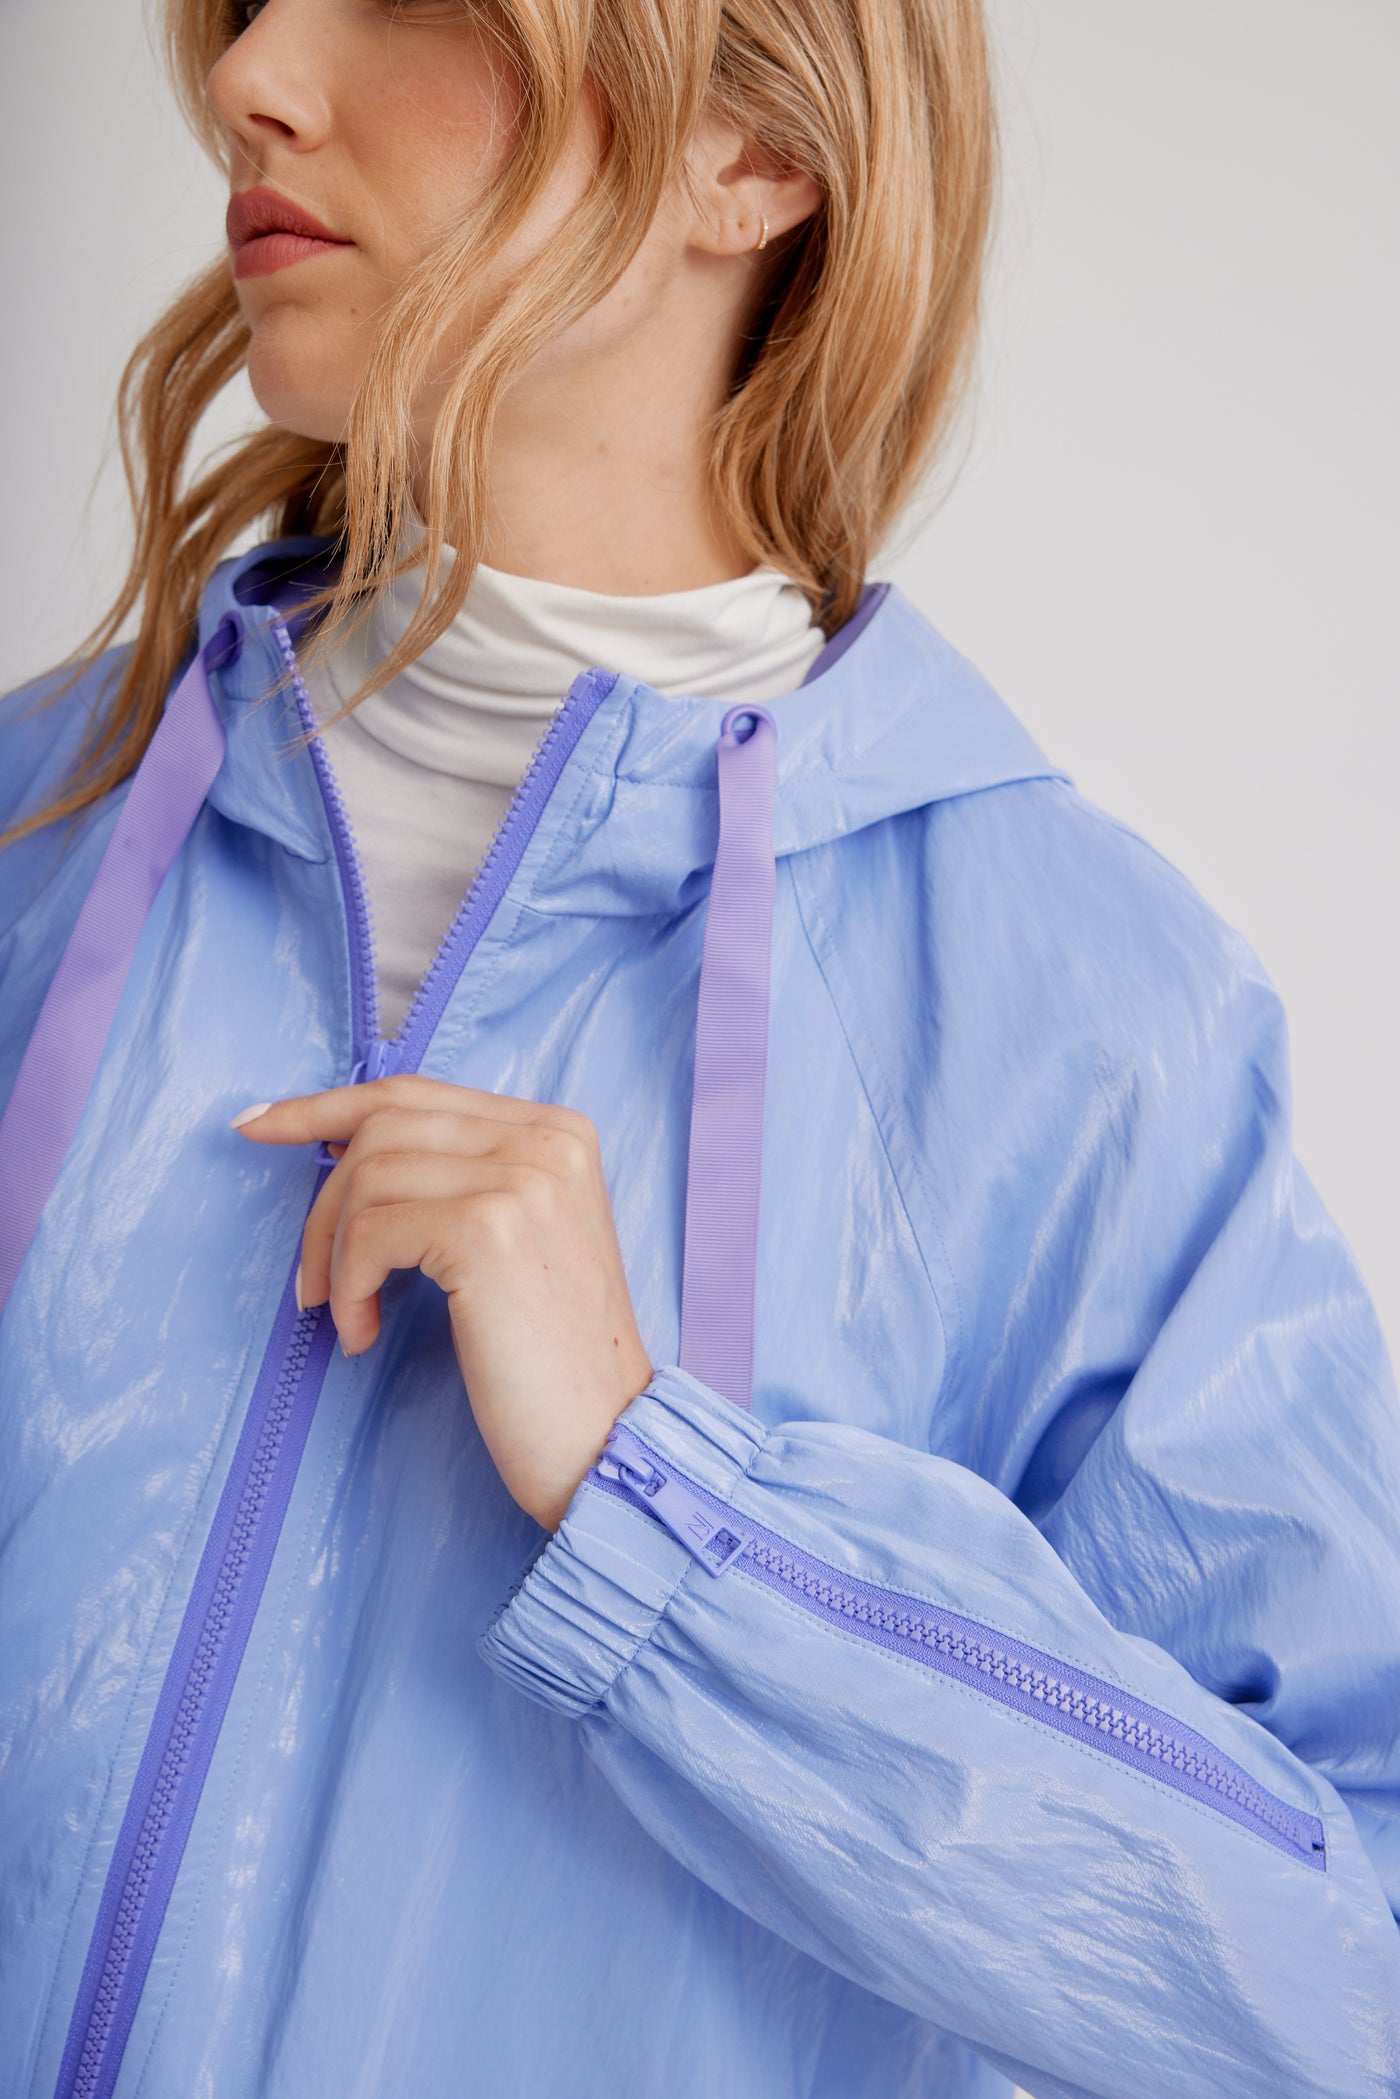 Nikki Jones Adjustable Hooded Blouson In Soft Luster Sheen W/ Contrast Trims & Zipper Detail On Sleeves 